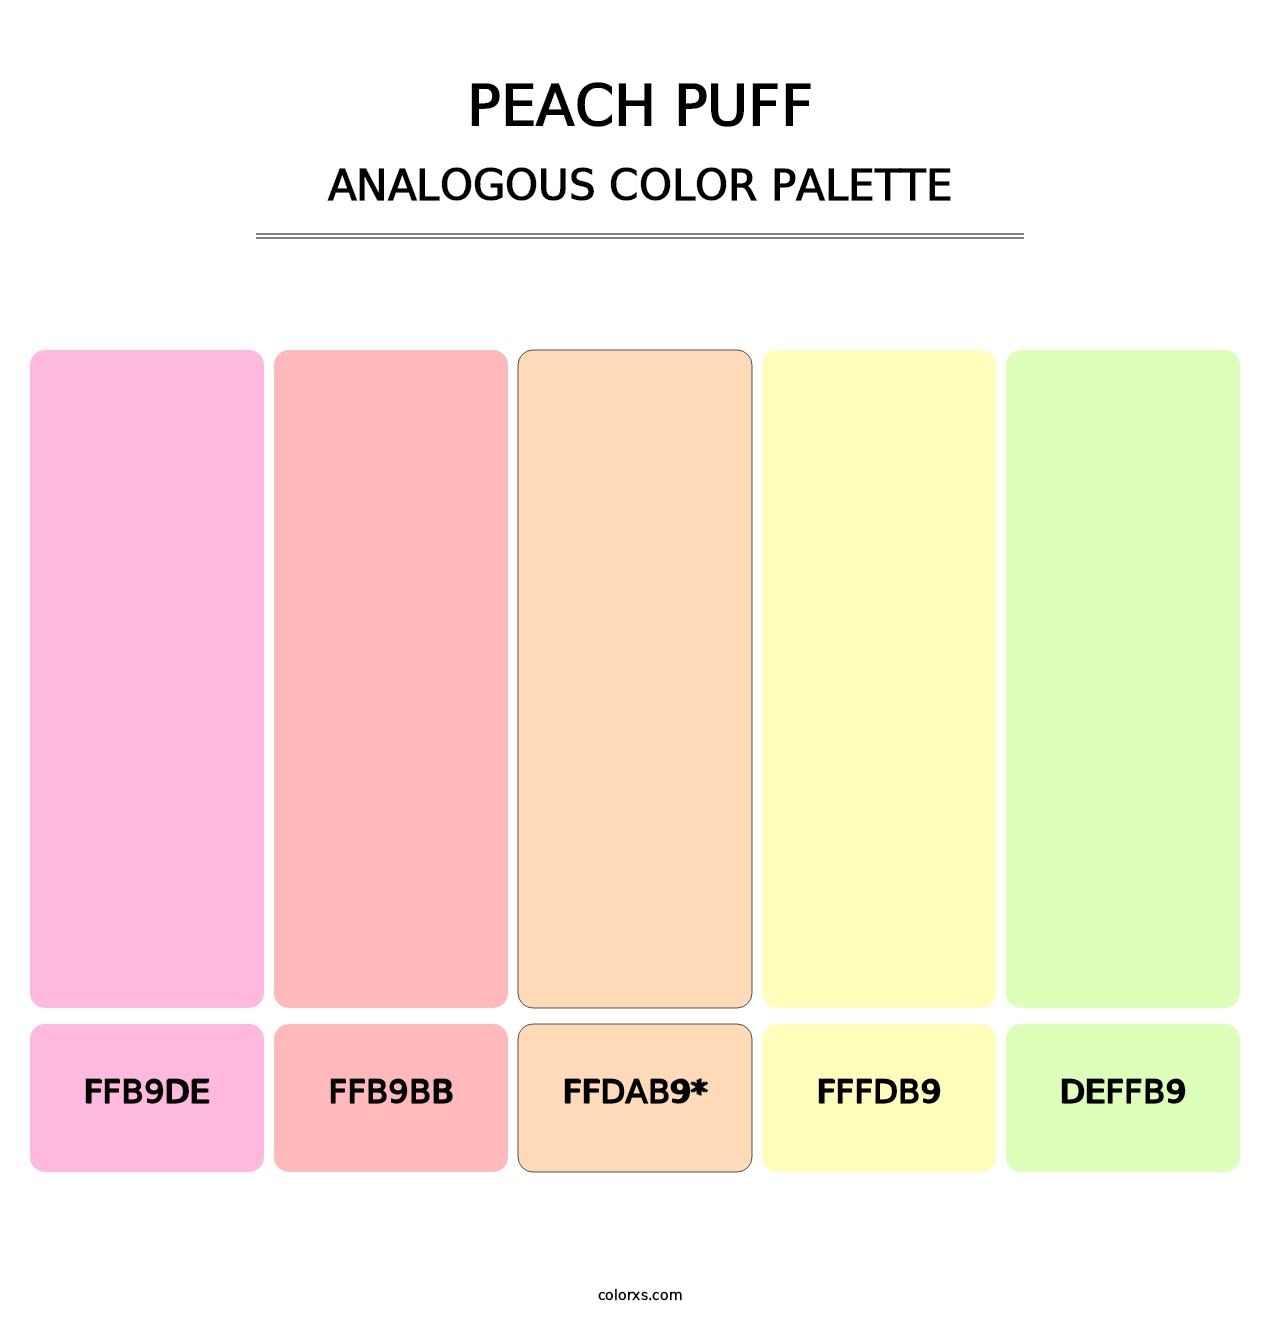 Peach Puff - Analogous Color Palette